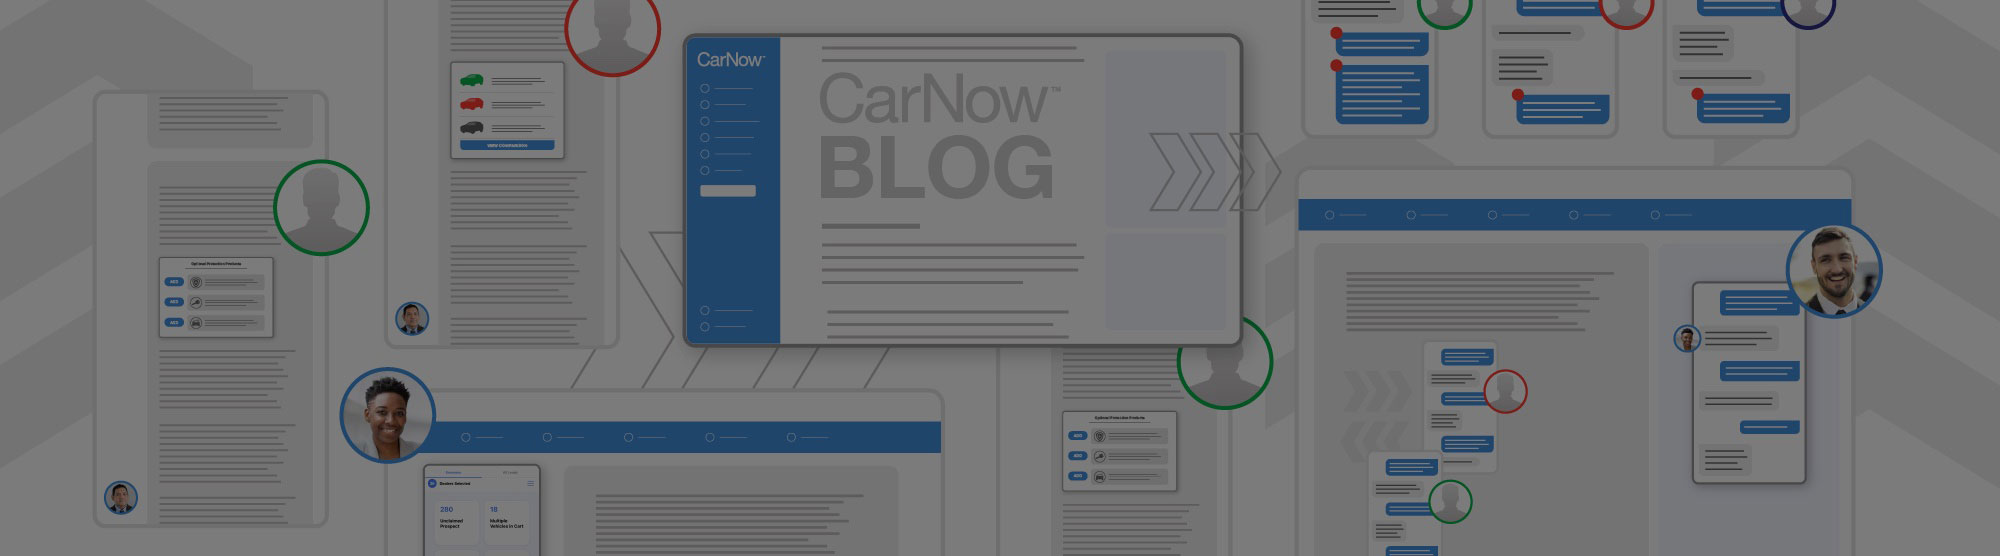 CarNow Blog